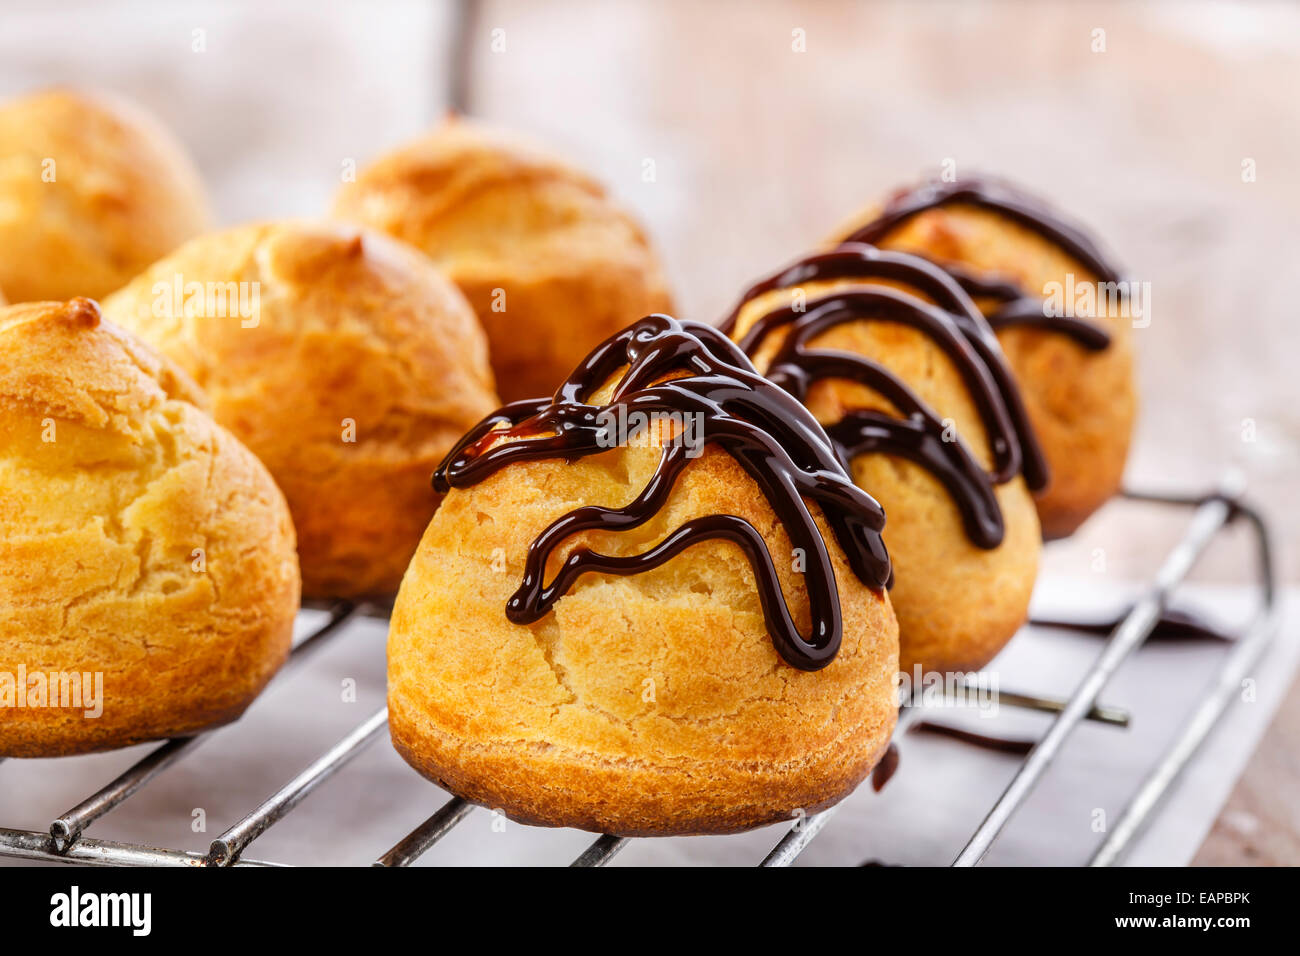 Eclair with chocolate sweet dessert Stock Photo